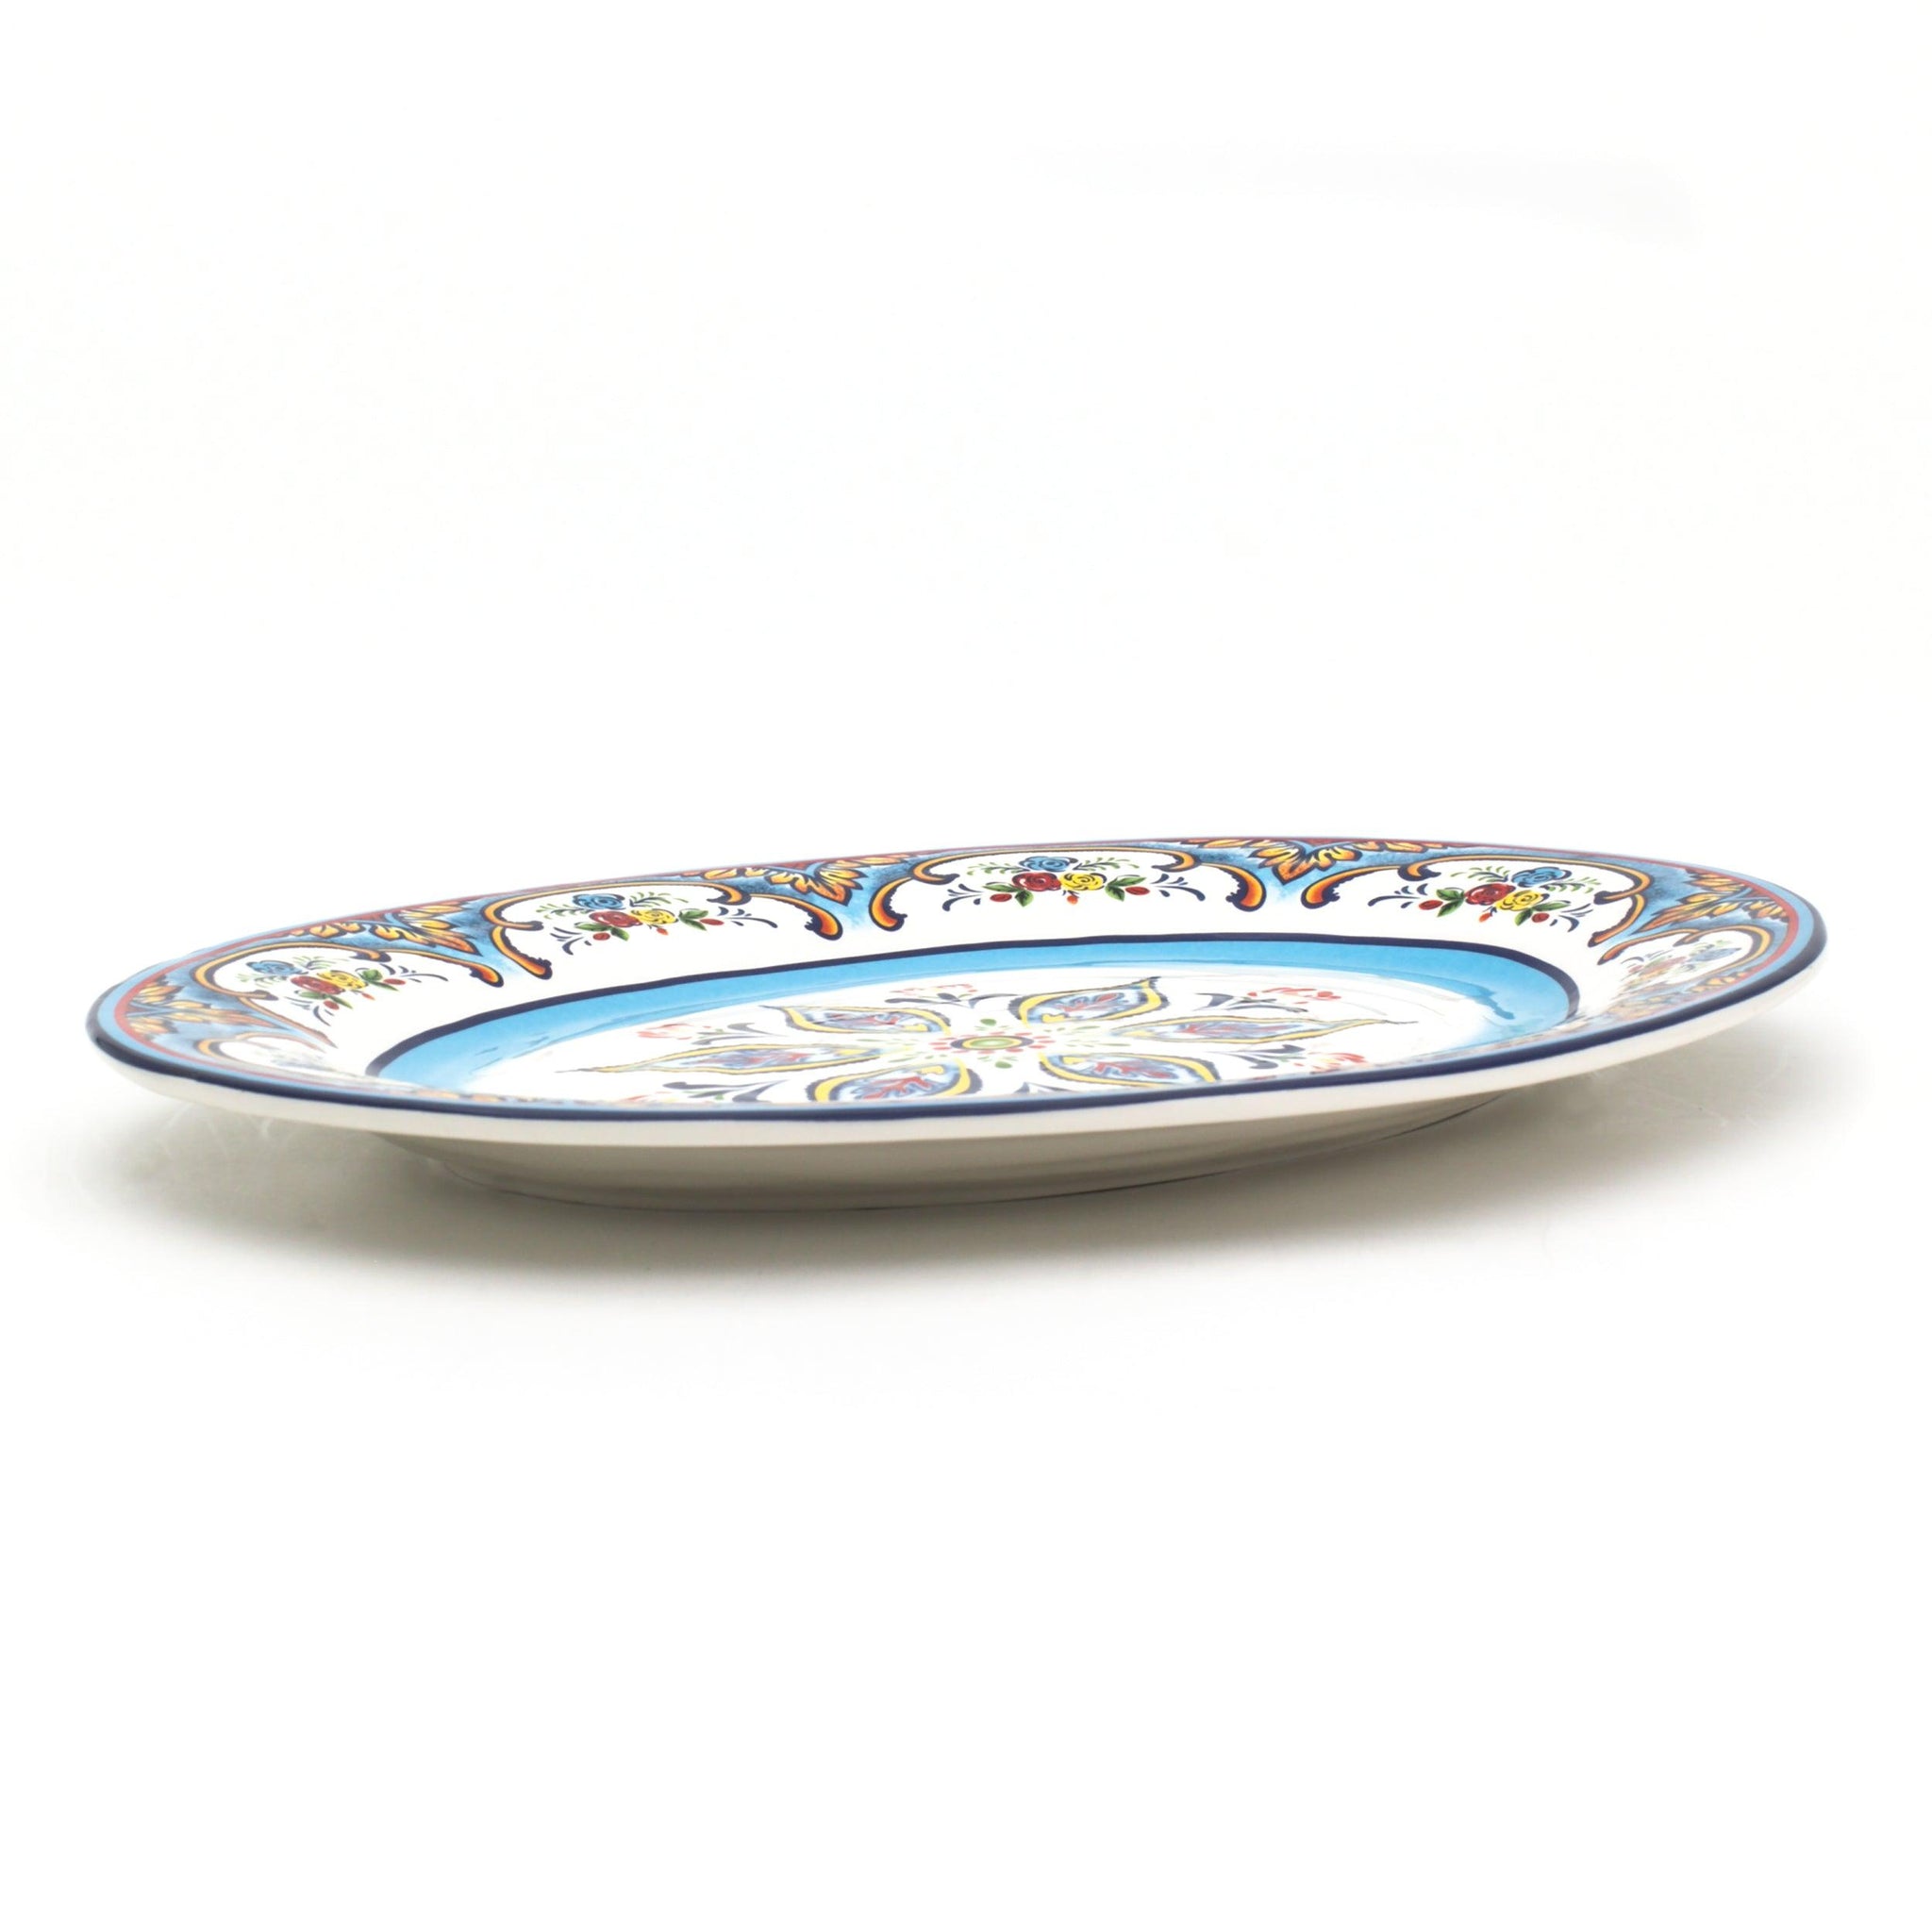 Zanzibar Oval Platter - Euro Ceramica 